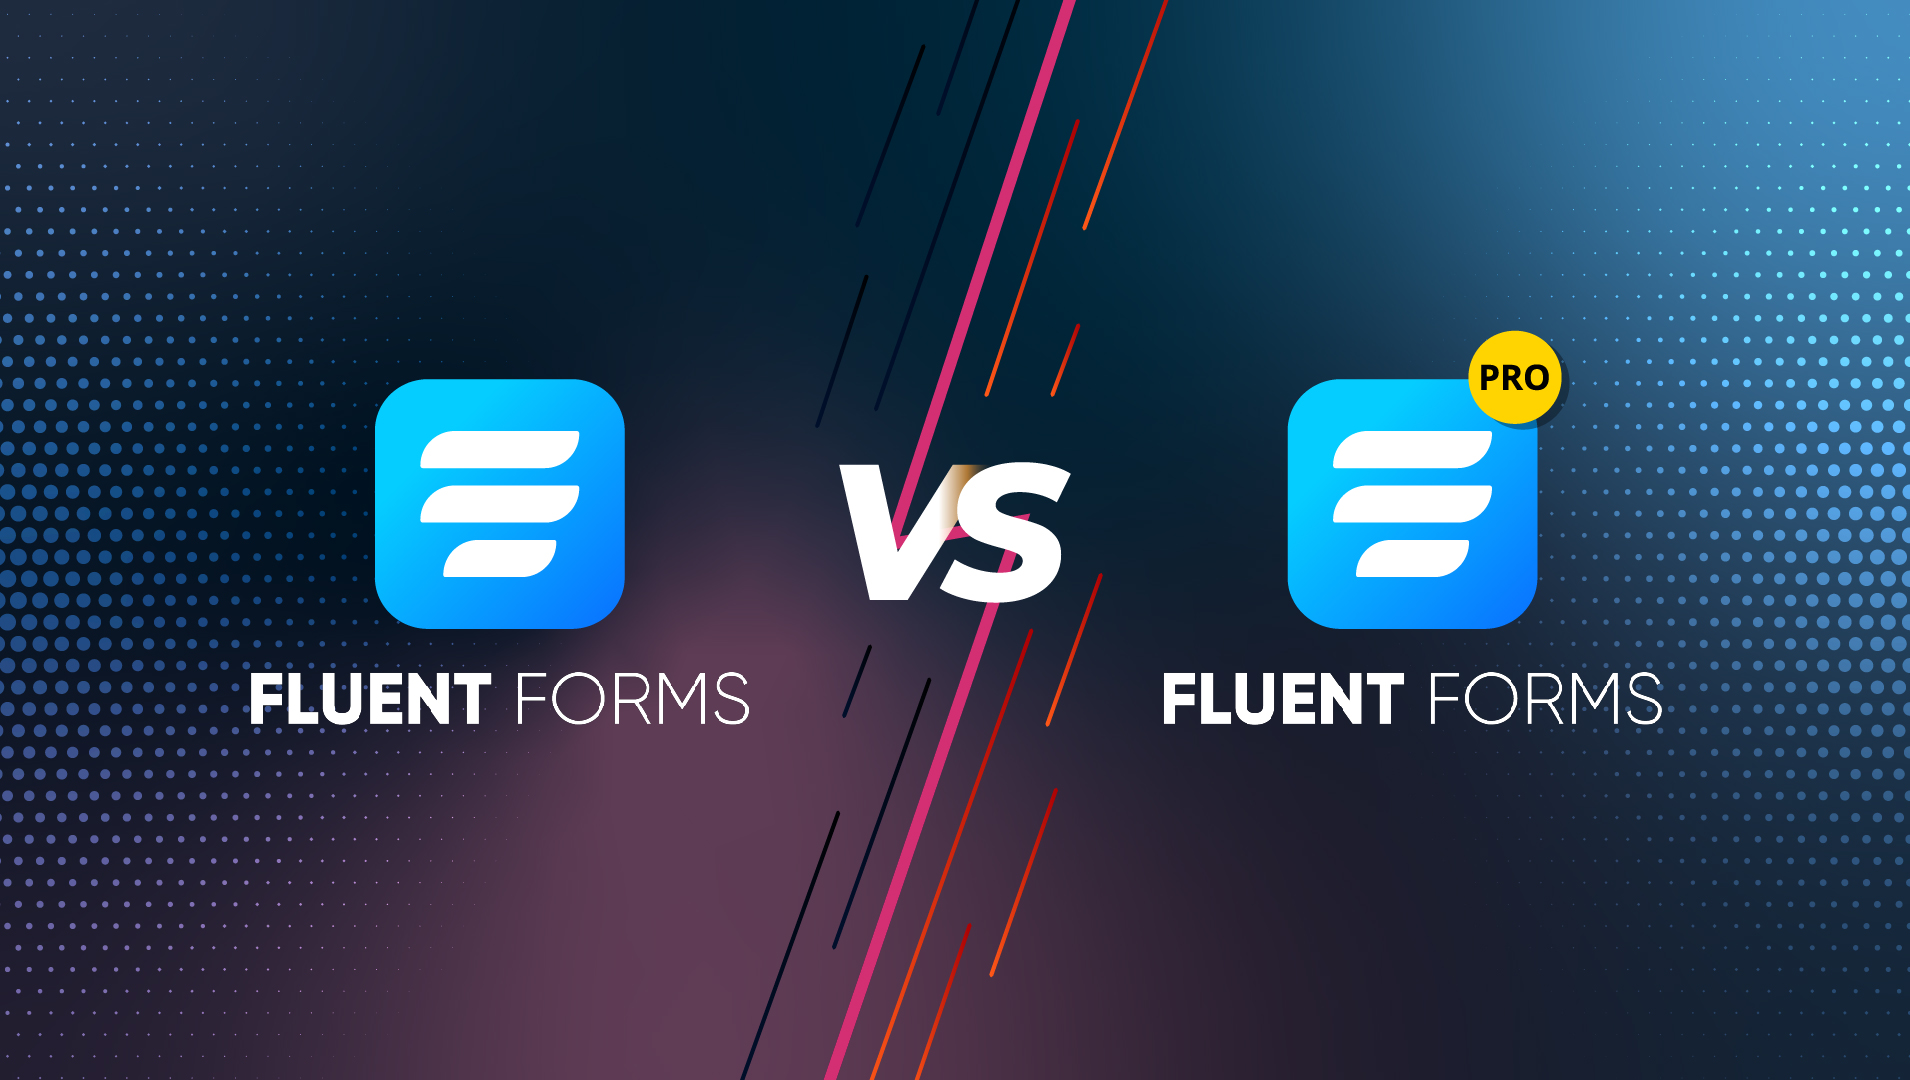 Fluent Forms - free vs pro